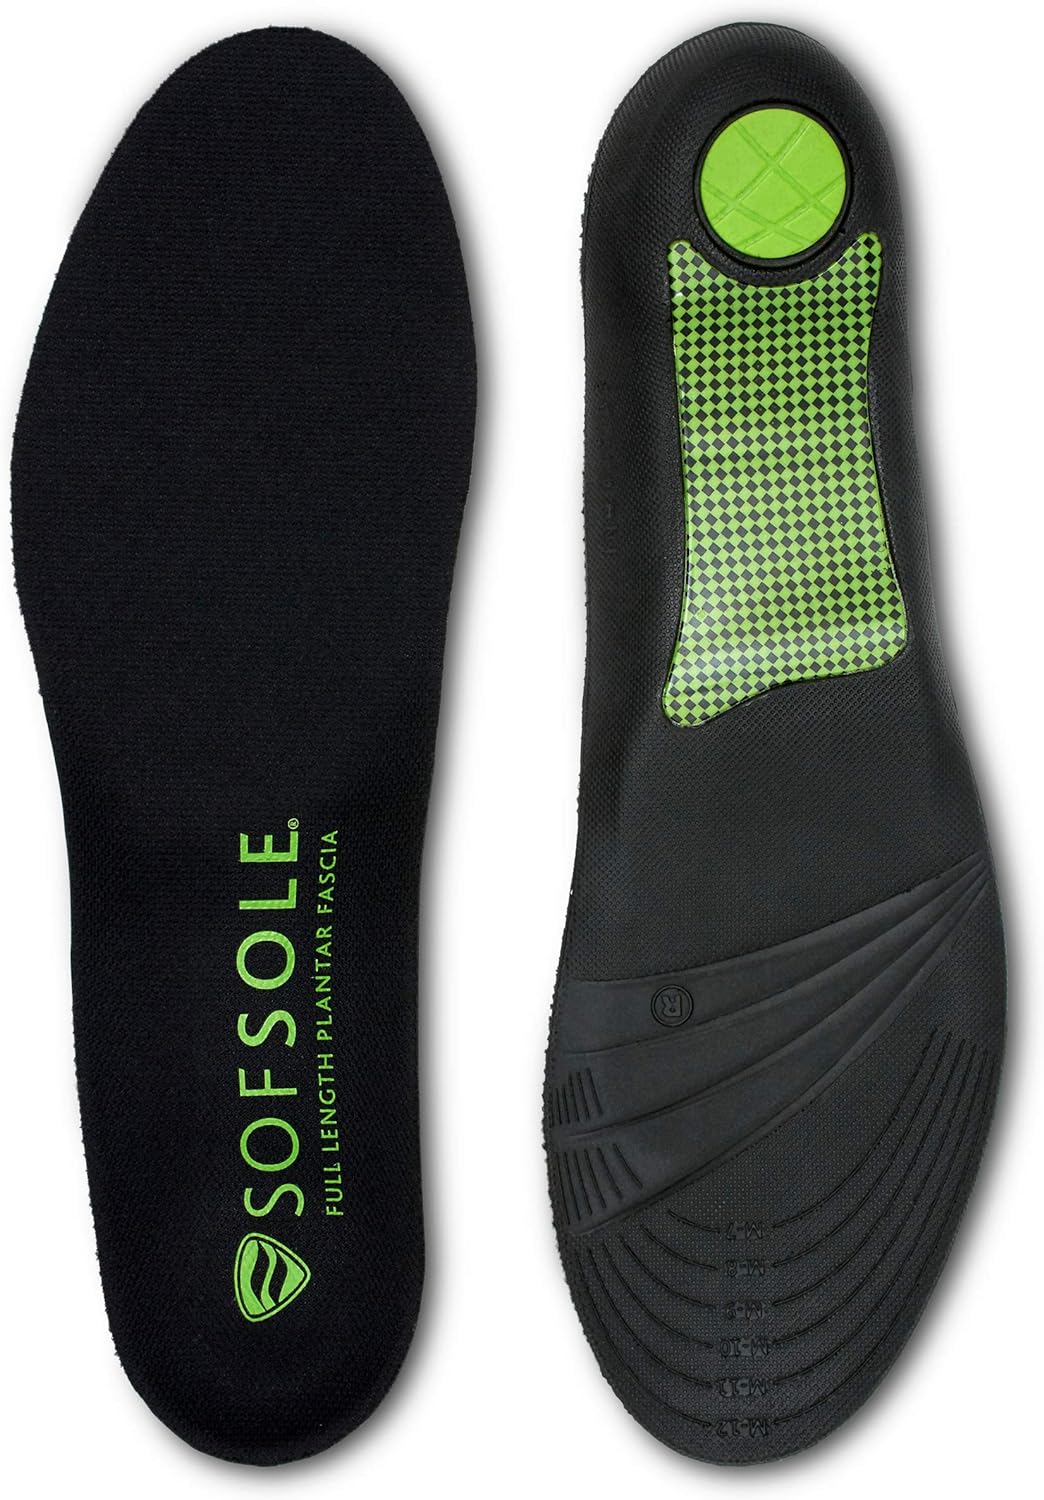 Sof Sole Insoles Men's Plantar Fascia Support Full-Length Gel Shoe Insert, Men’s 7-13